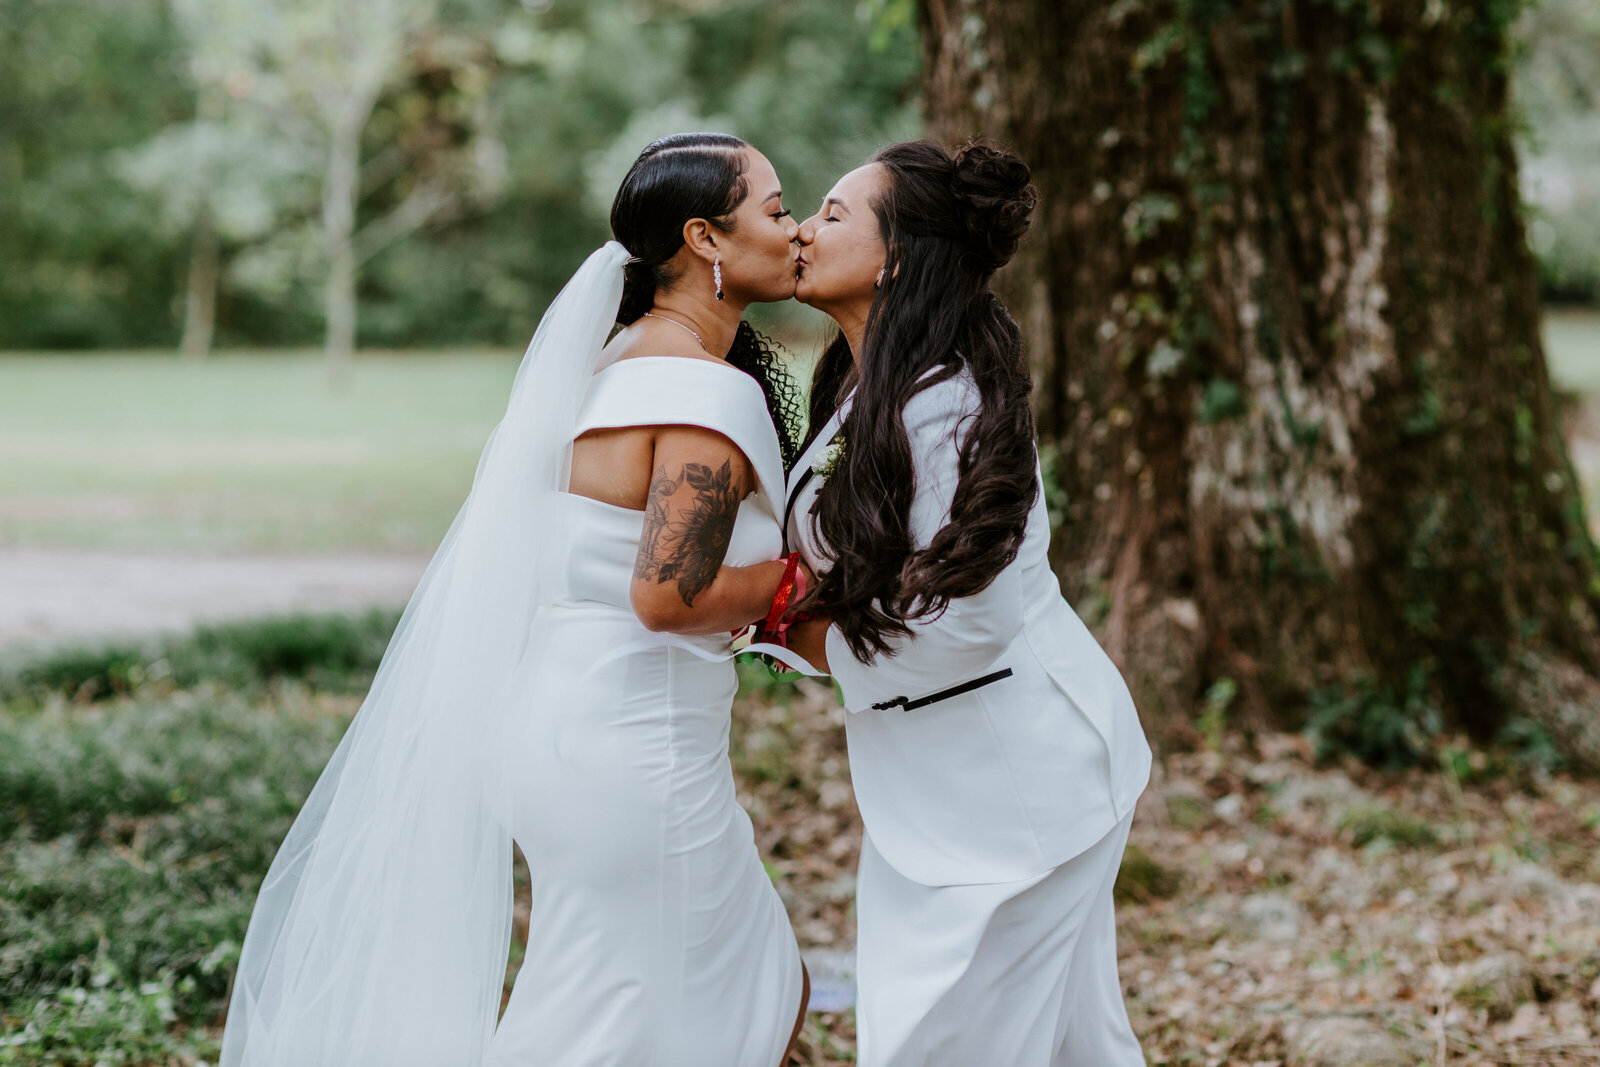 Lesbian couple wedding kiss